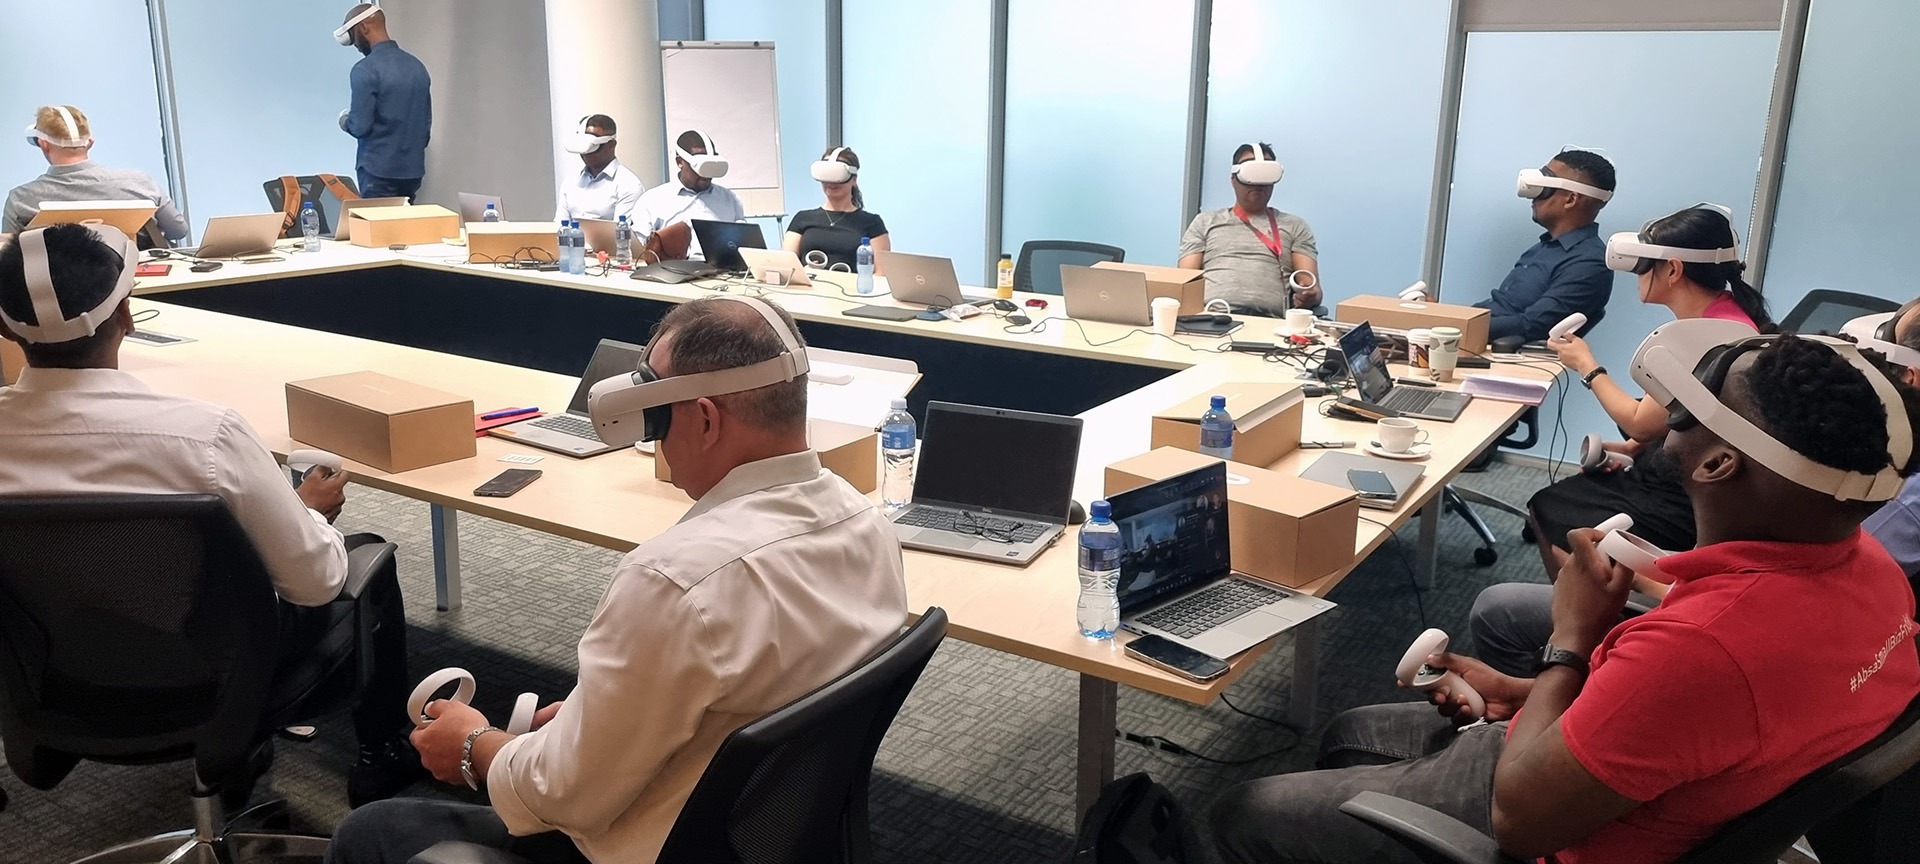 About the Virtual Reality Company